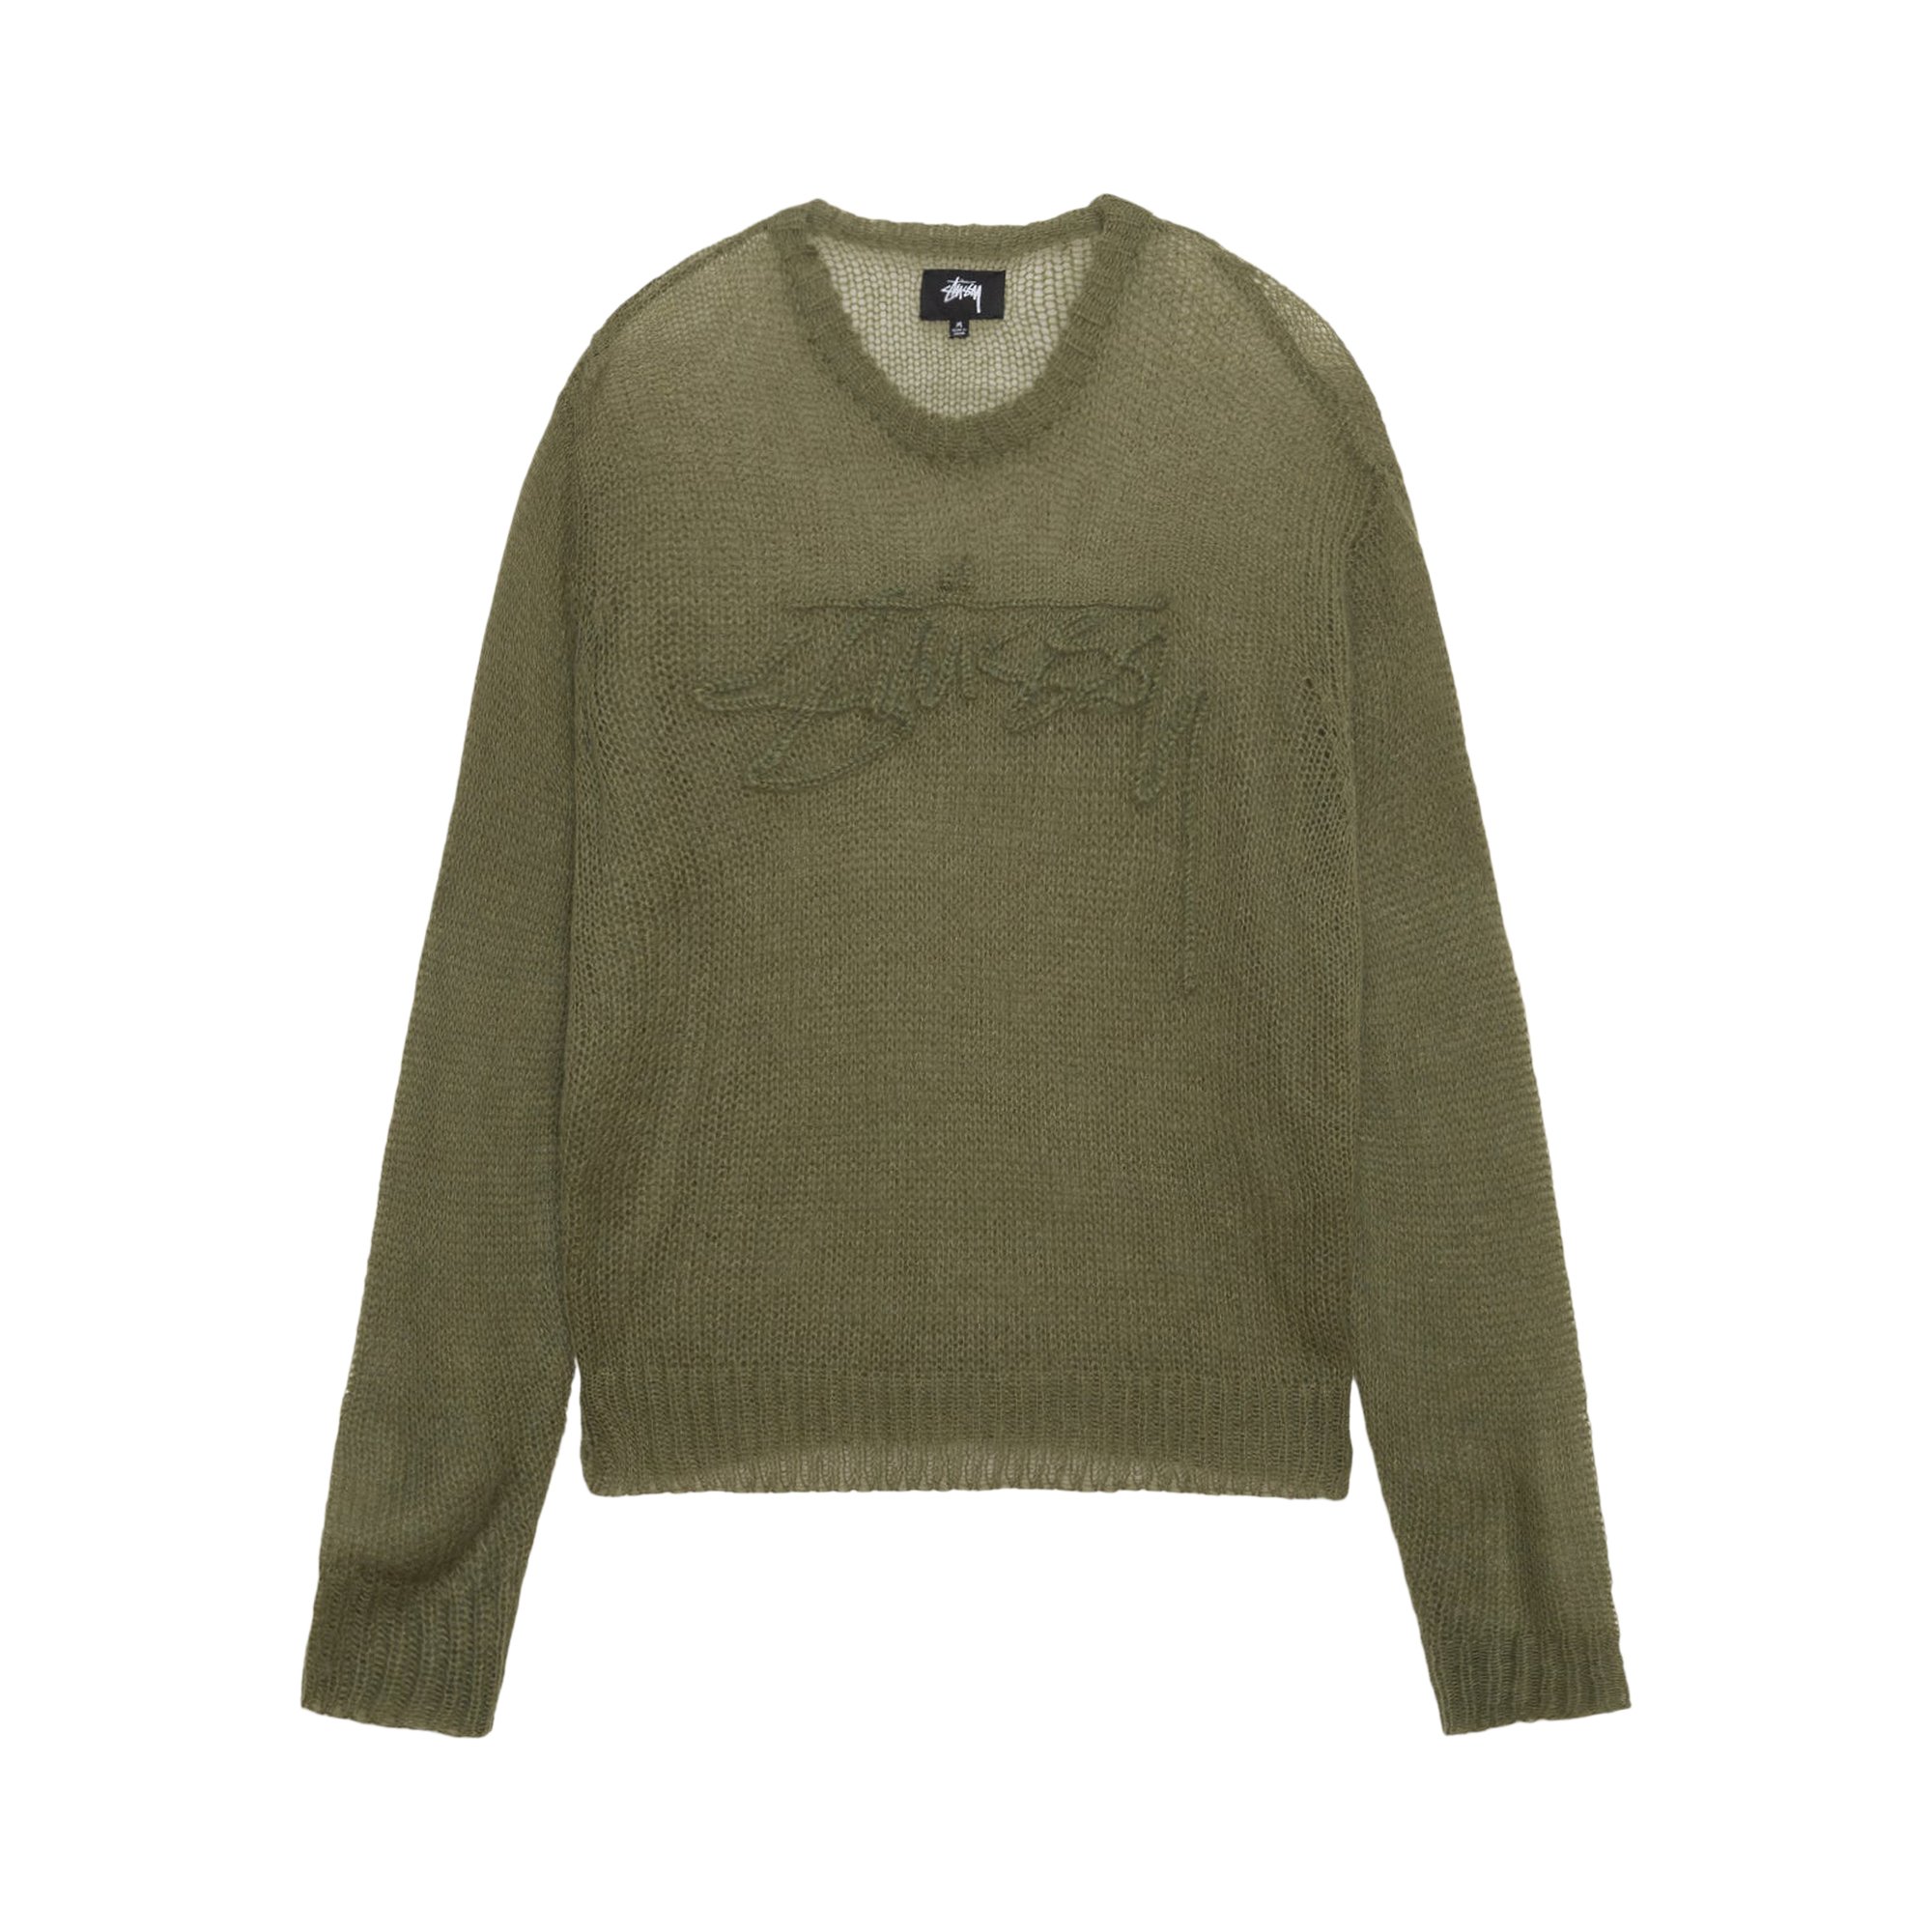 Buy Stussy Loose Knit Logo Sweater 'Cypress' - 117180 CYPR | GOAT